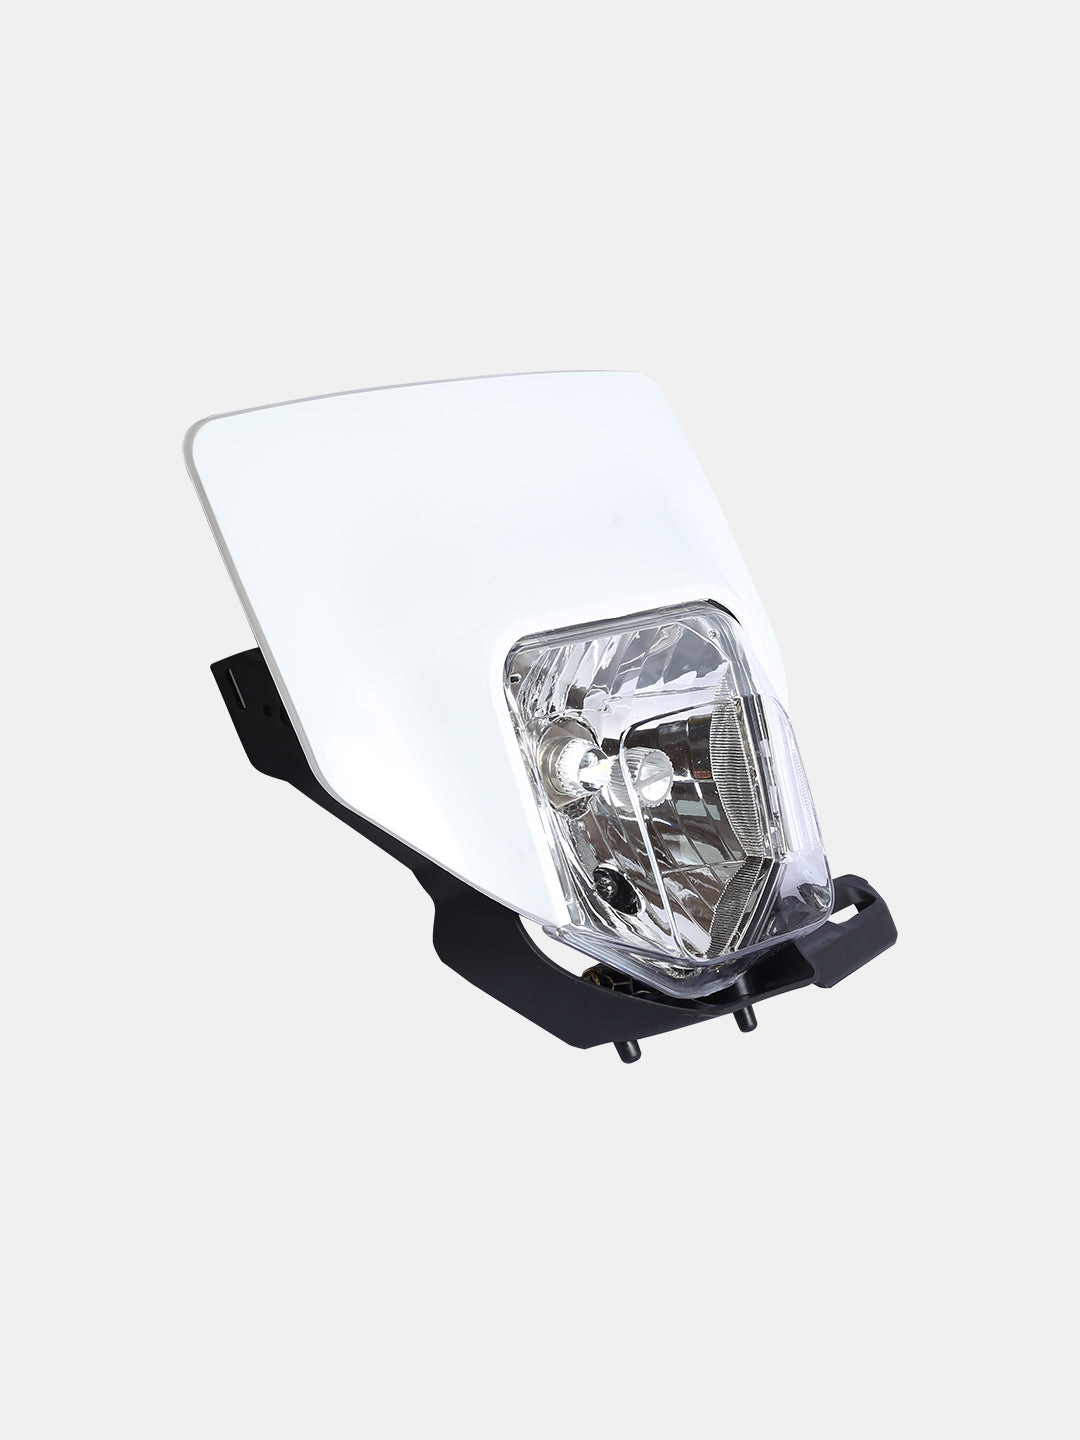 Husqvarna Enduro Inspired LED Headlight